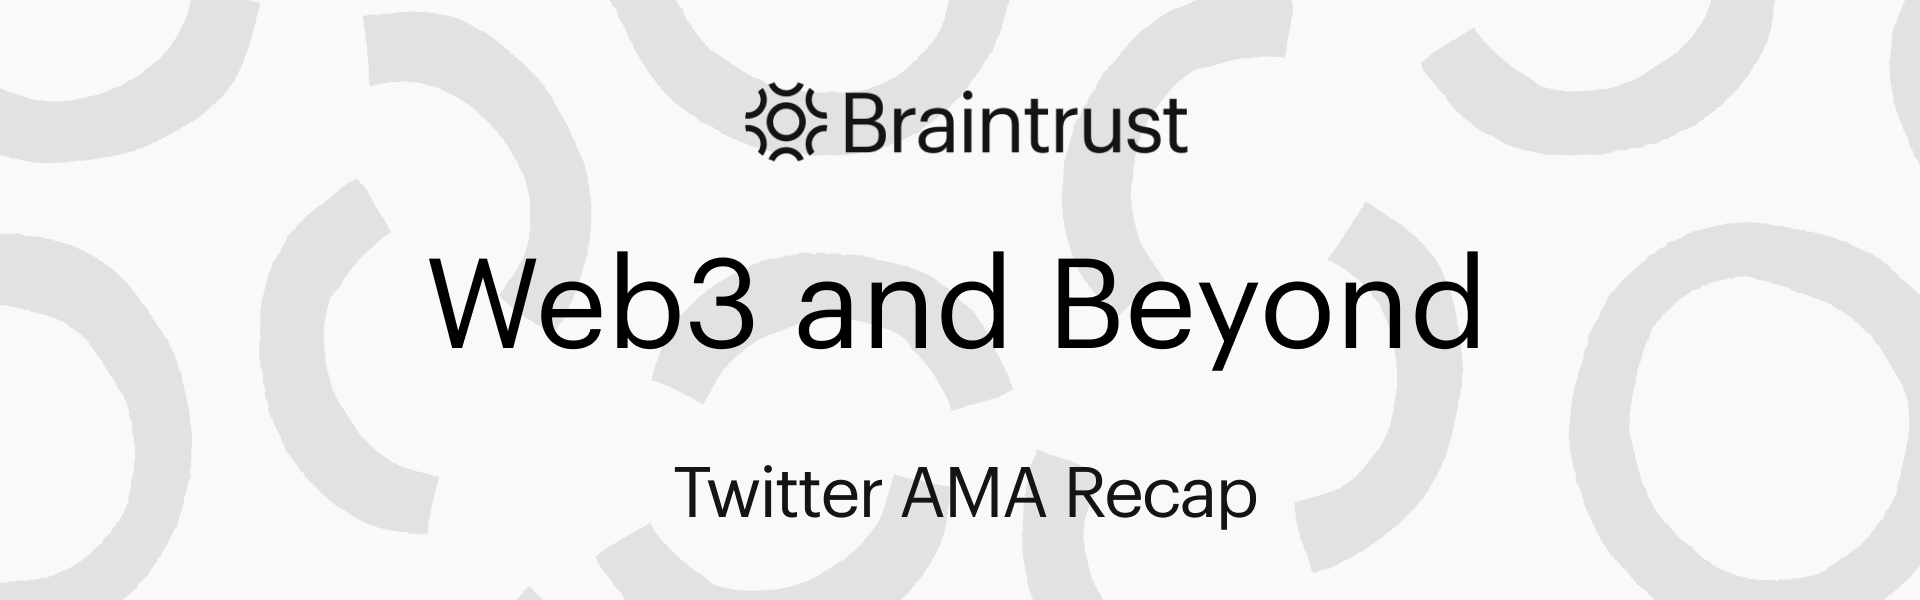 Braintrust-Twitter-AMA-September-29-2021-Blog-Recap